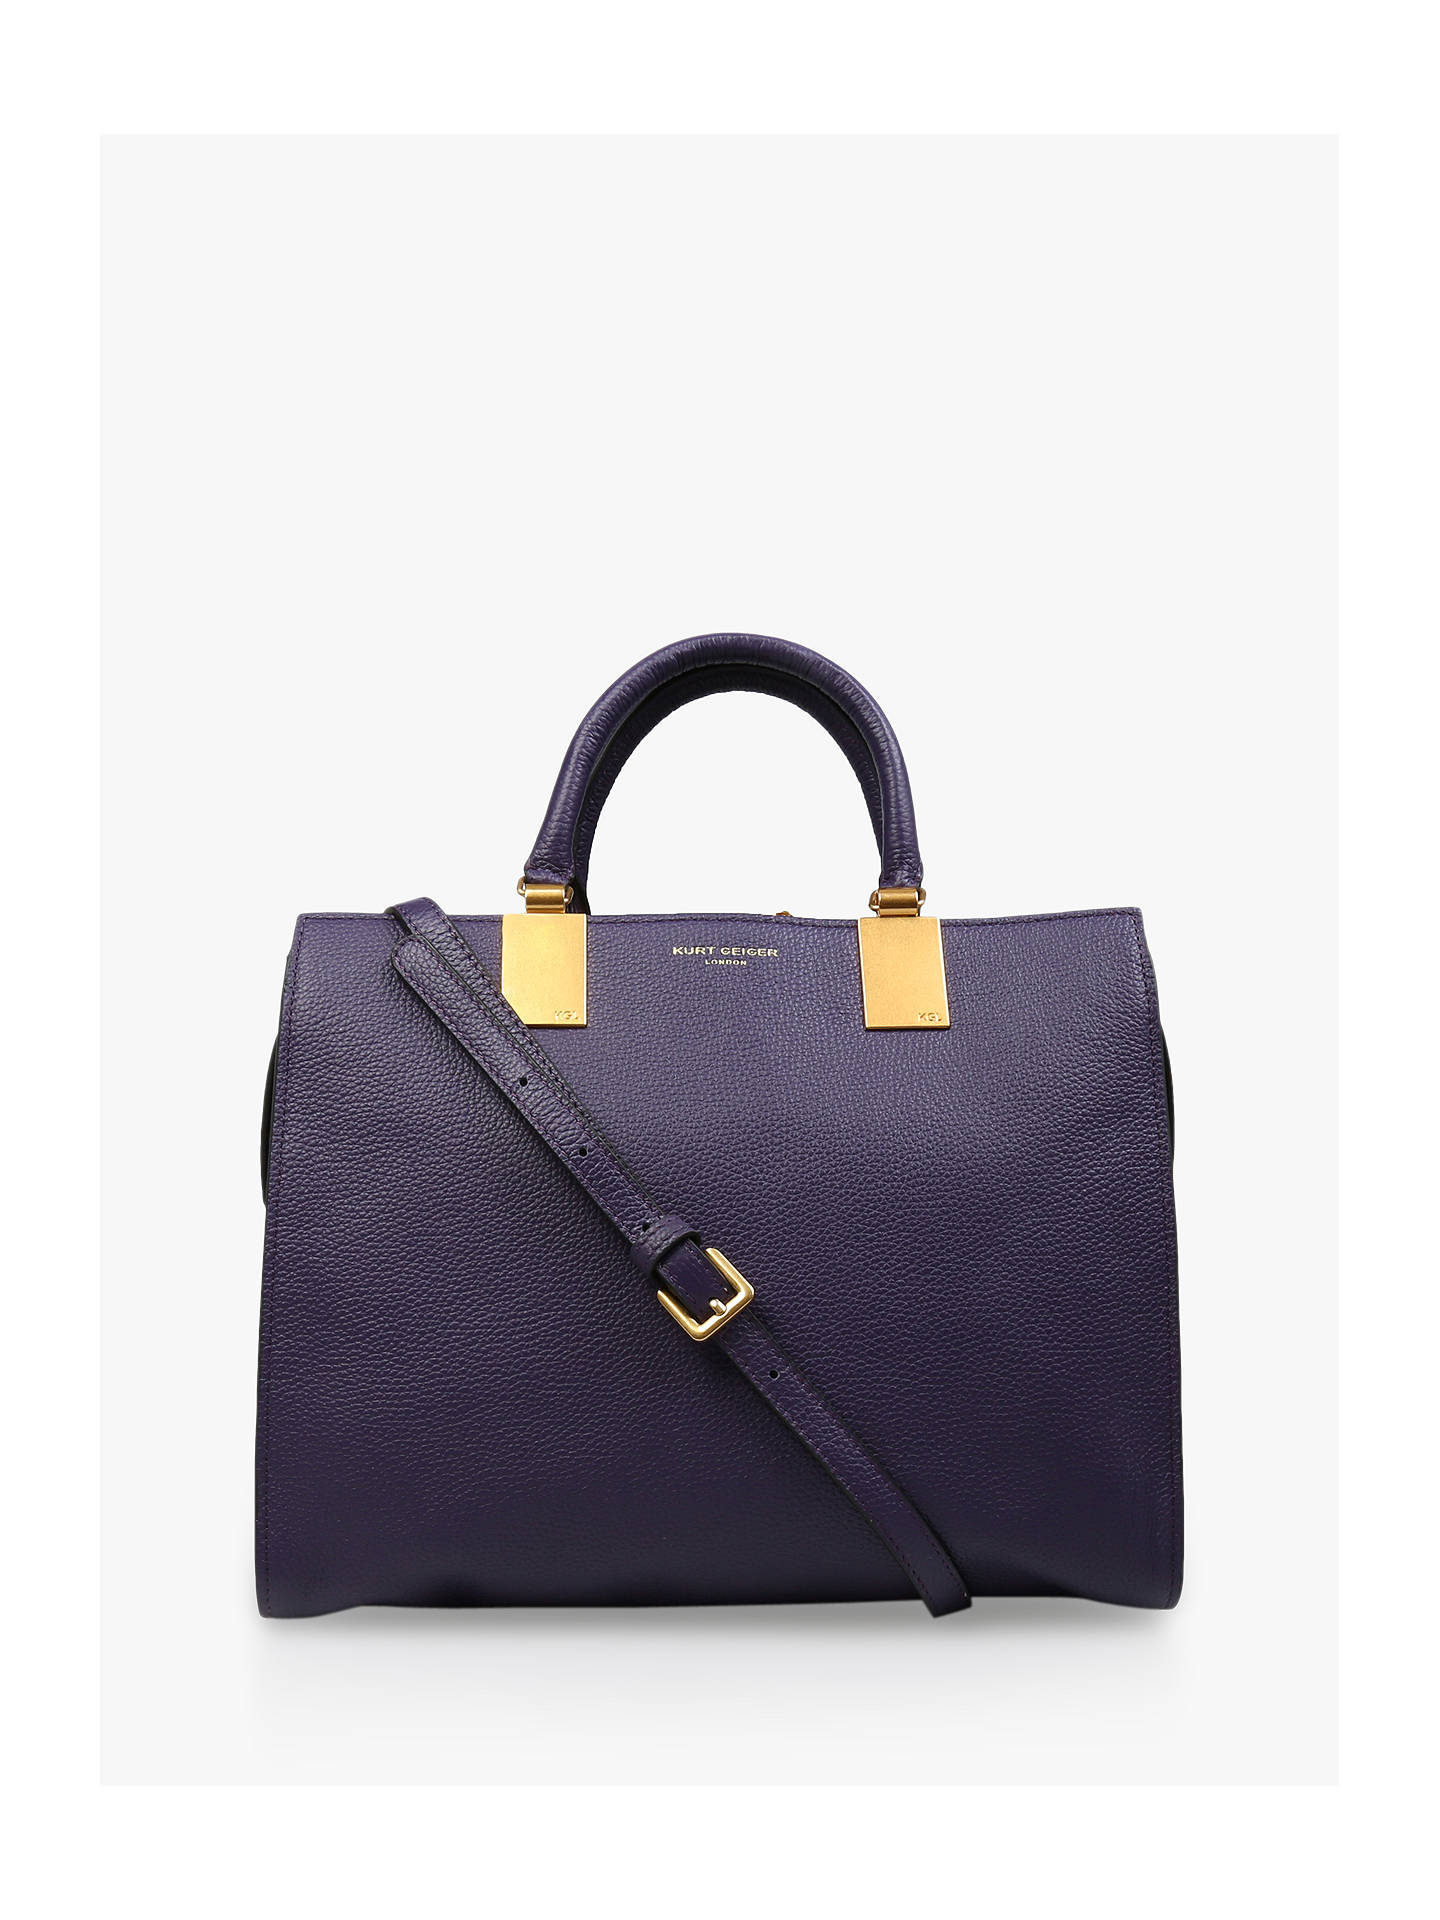 Kurt Geiger London Emma Leather Tote Bag, Purple at John Lewis & Partners